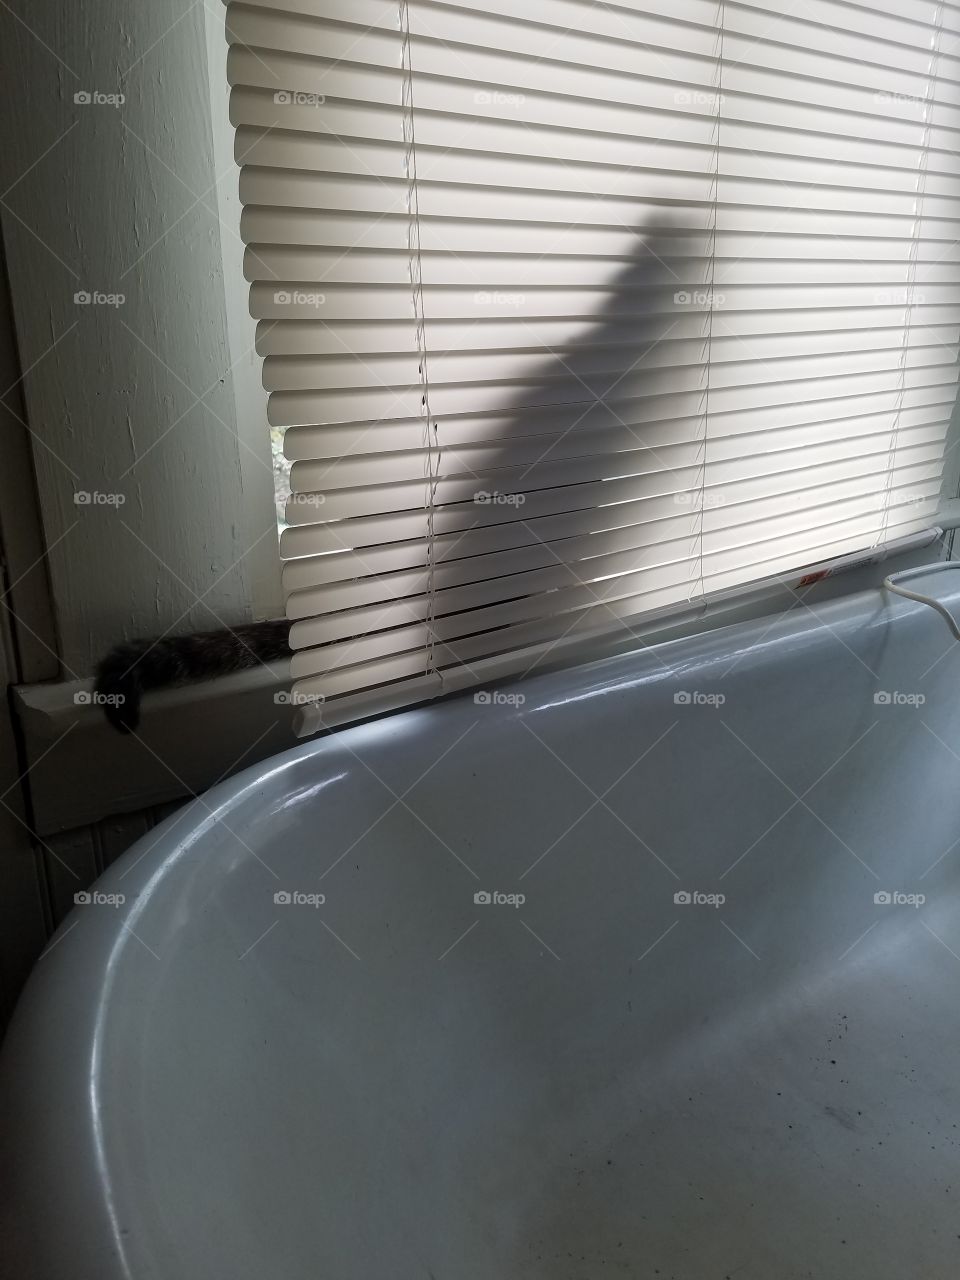 Cat on a Ledge behind Bathtub